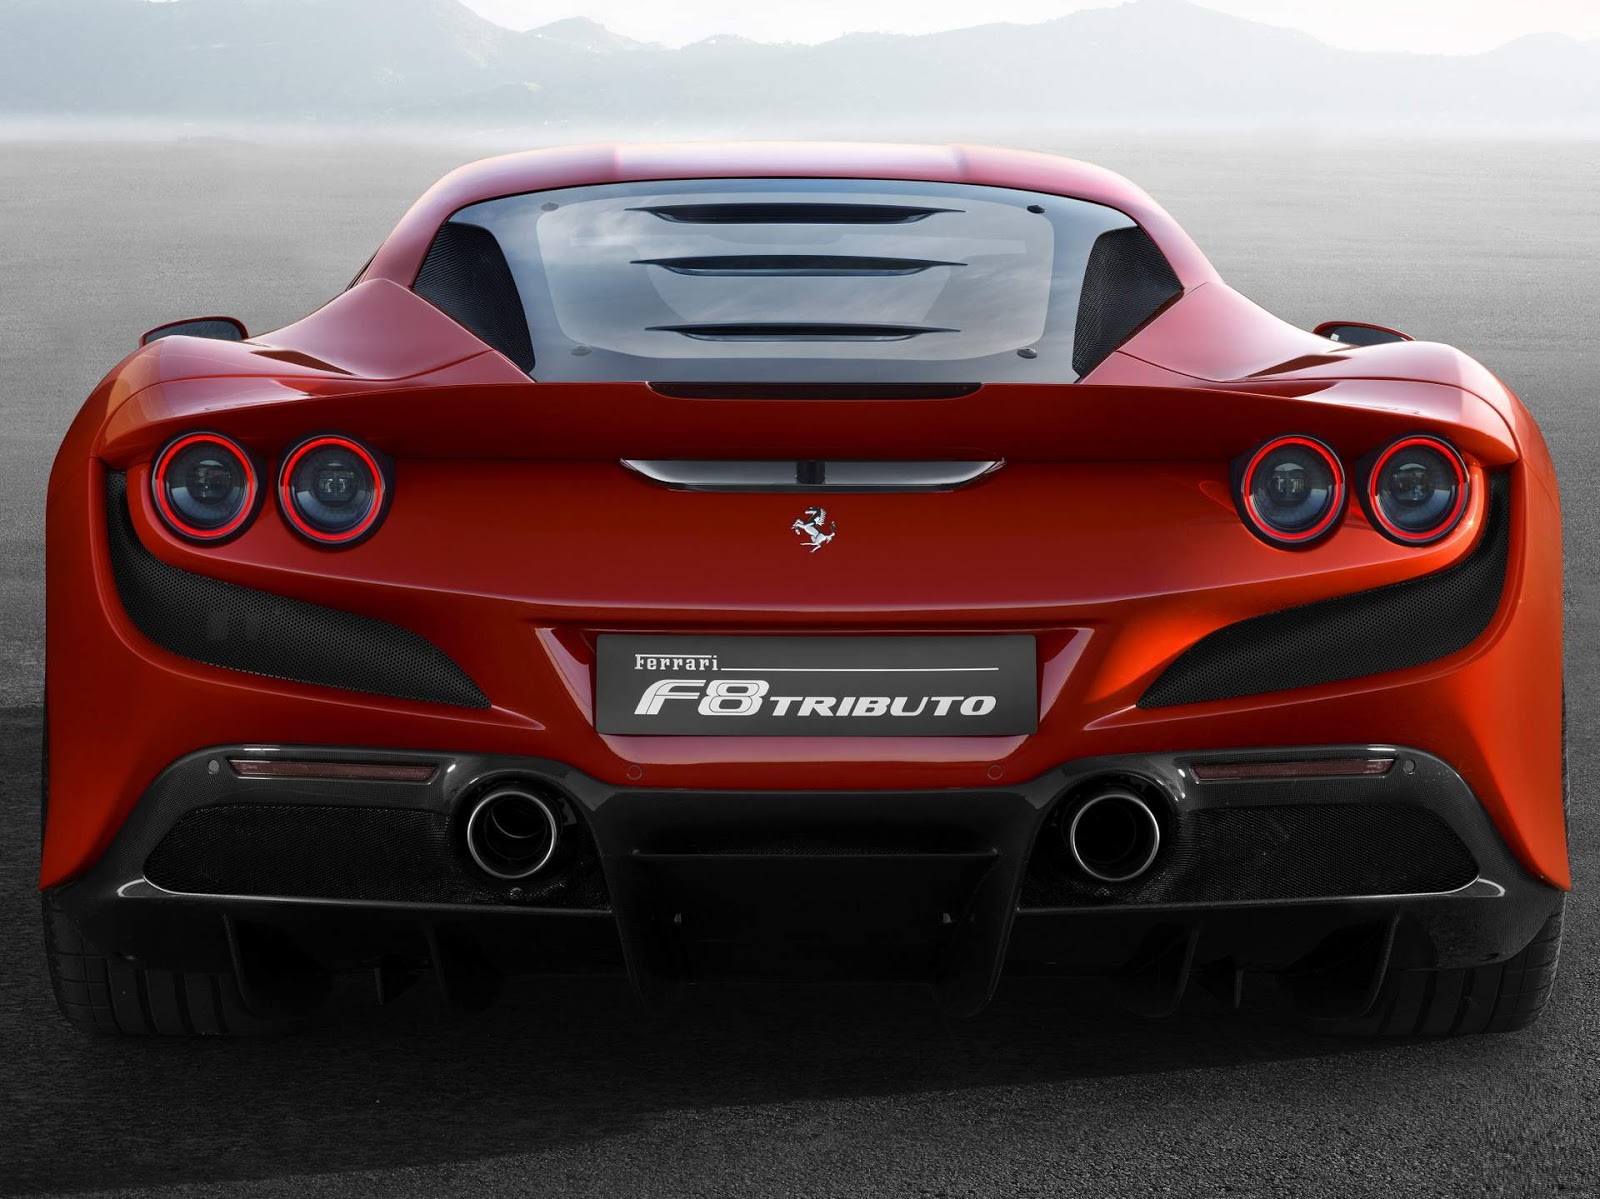 Ferrari F8 tabela fipe